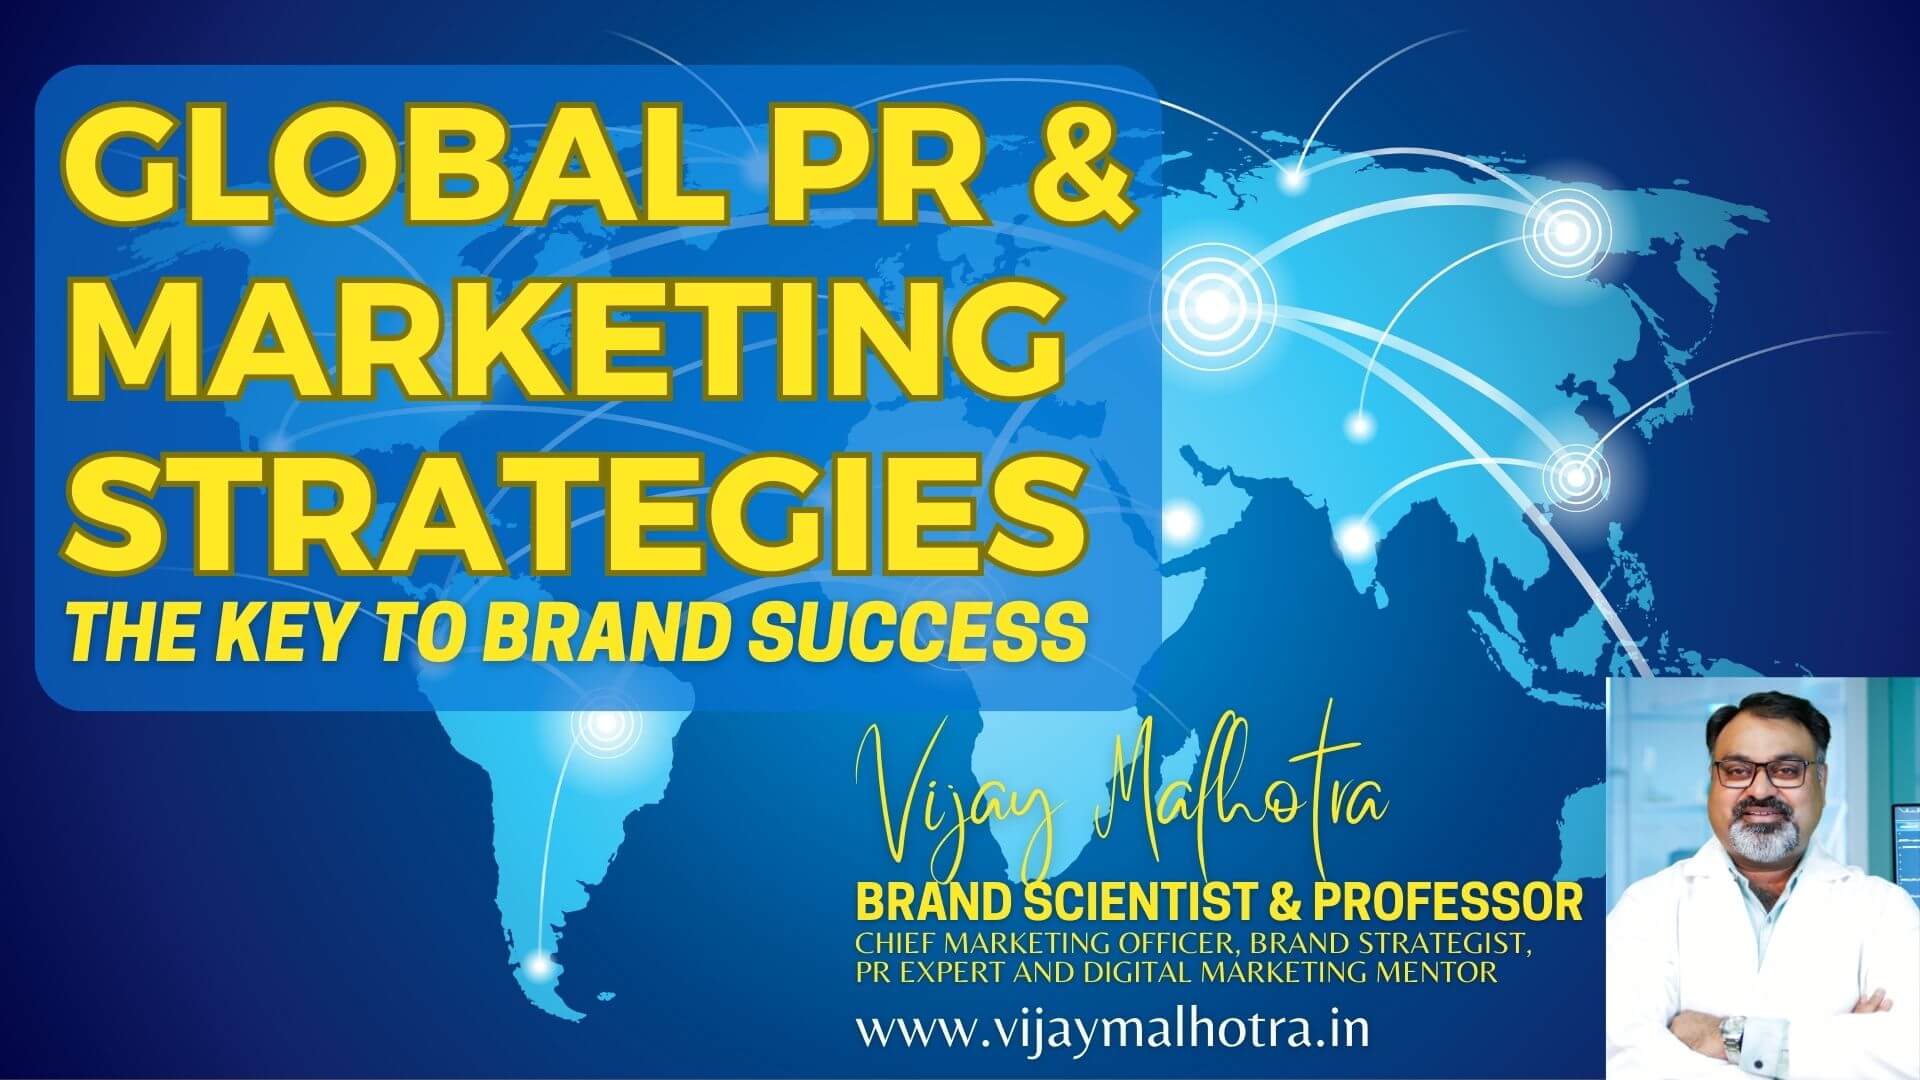 Vijay Malhotra's pivotal global PR and marketing strategies driving brand success worldwide